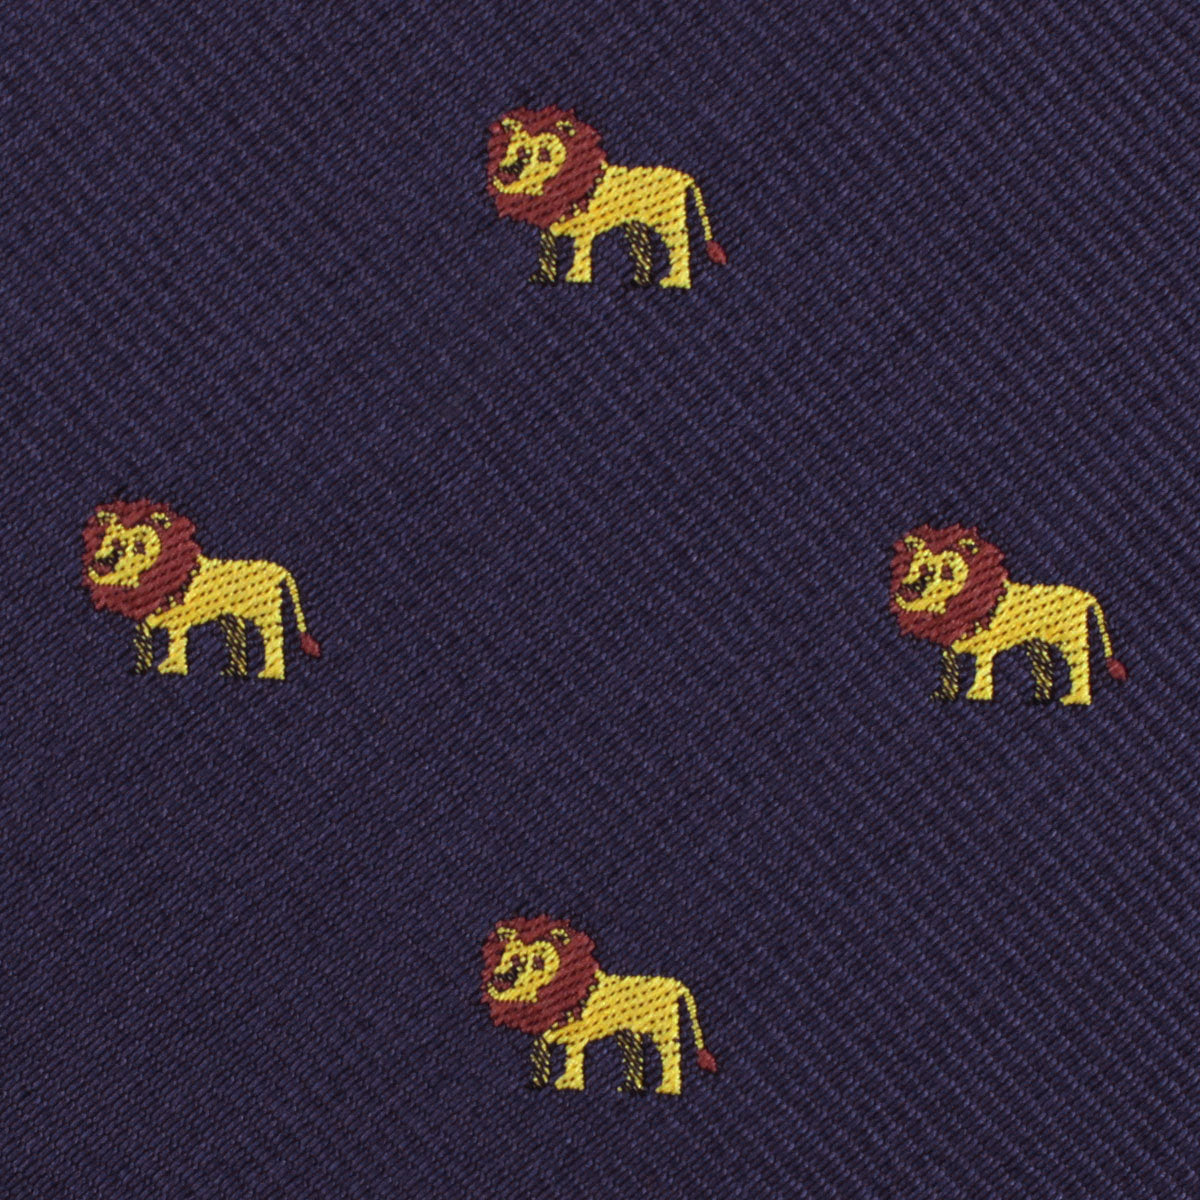 African Lion Fabric Kids Bowtie